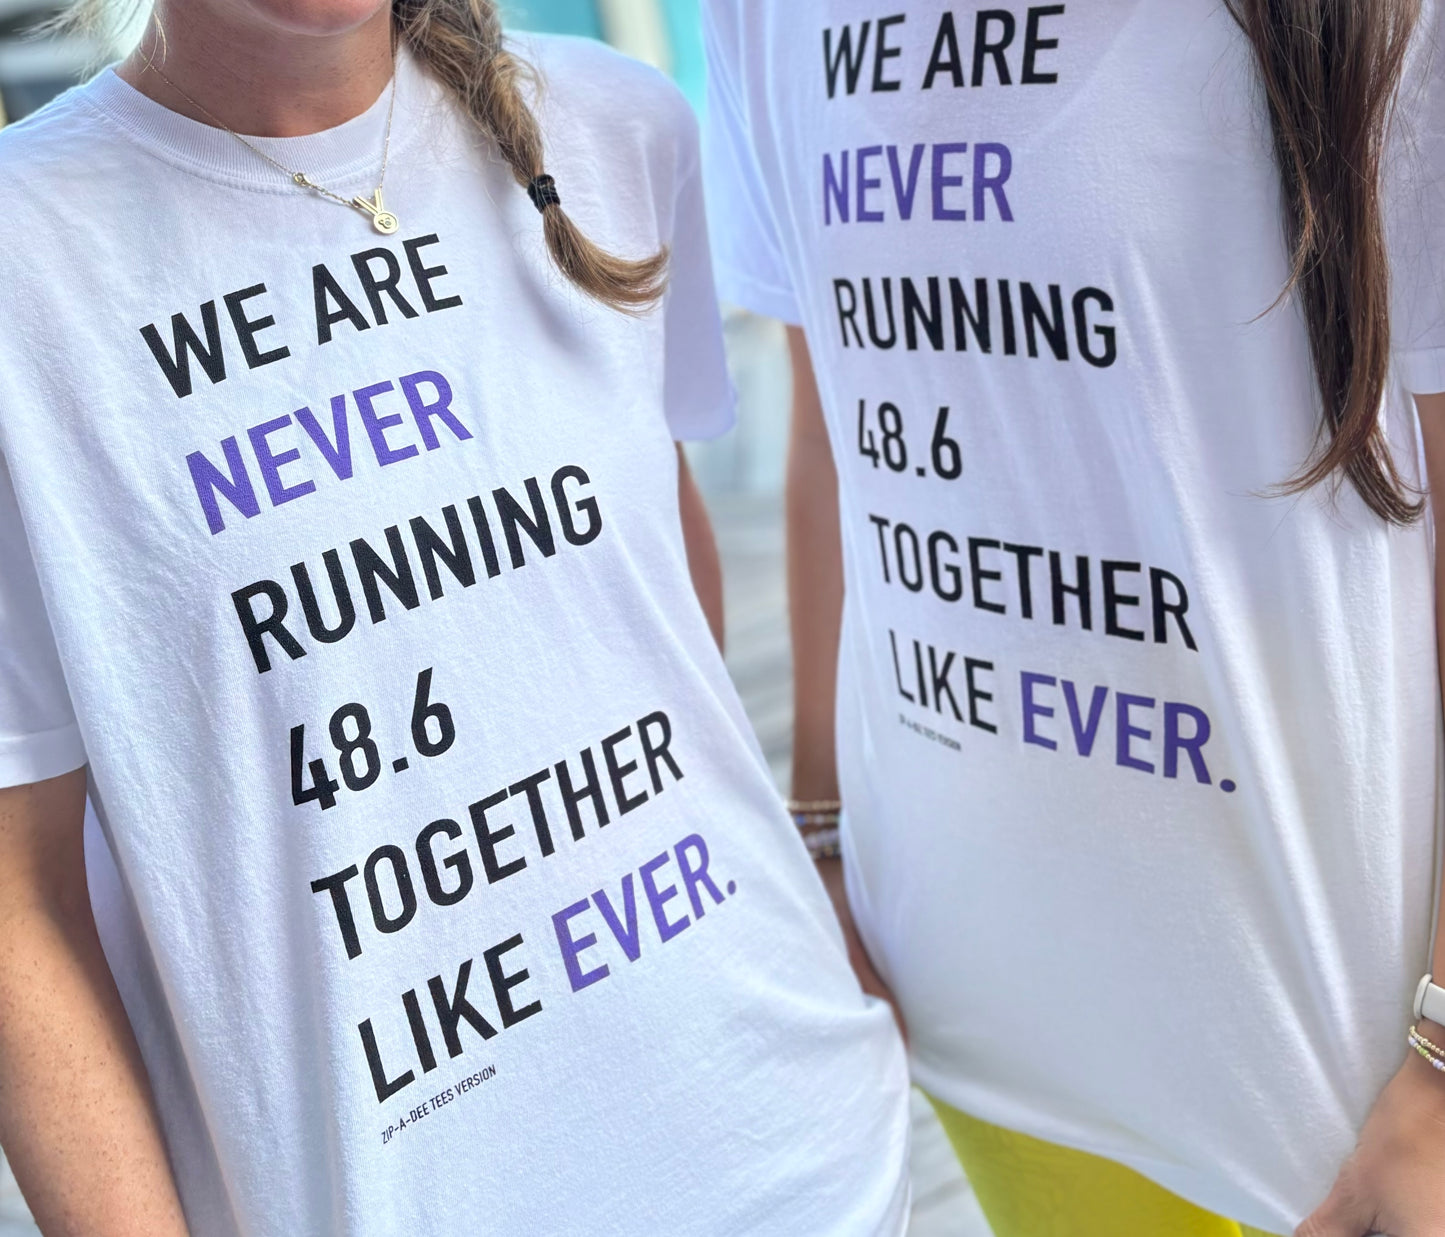 Never Running 48.6